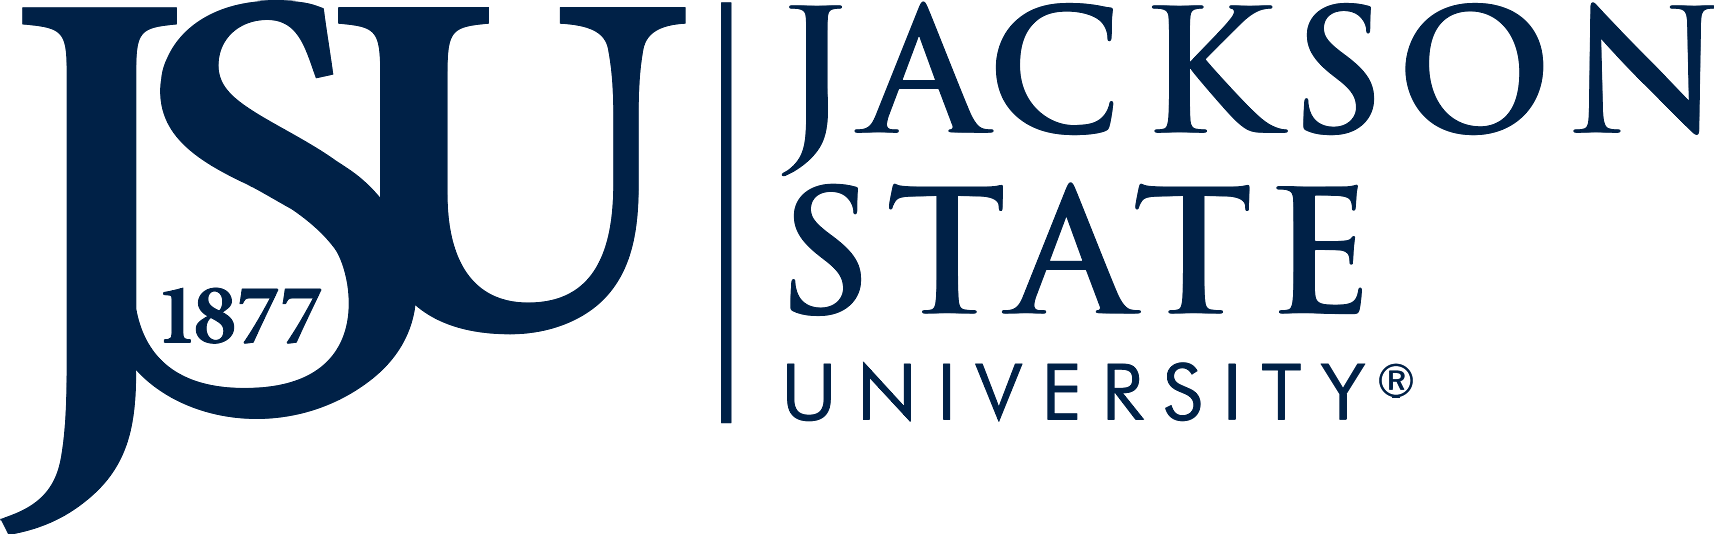 Jackson state university logo